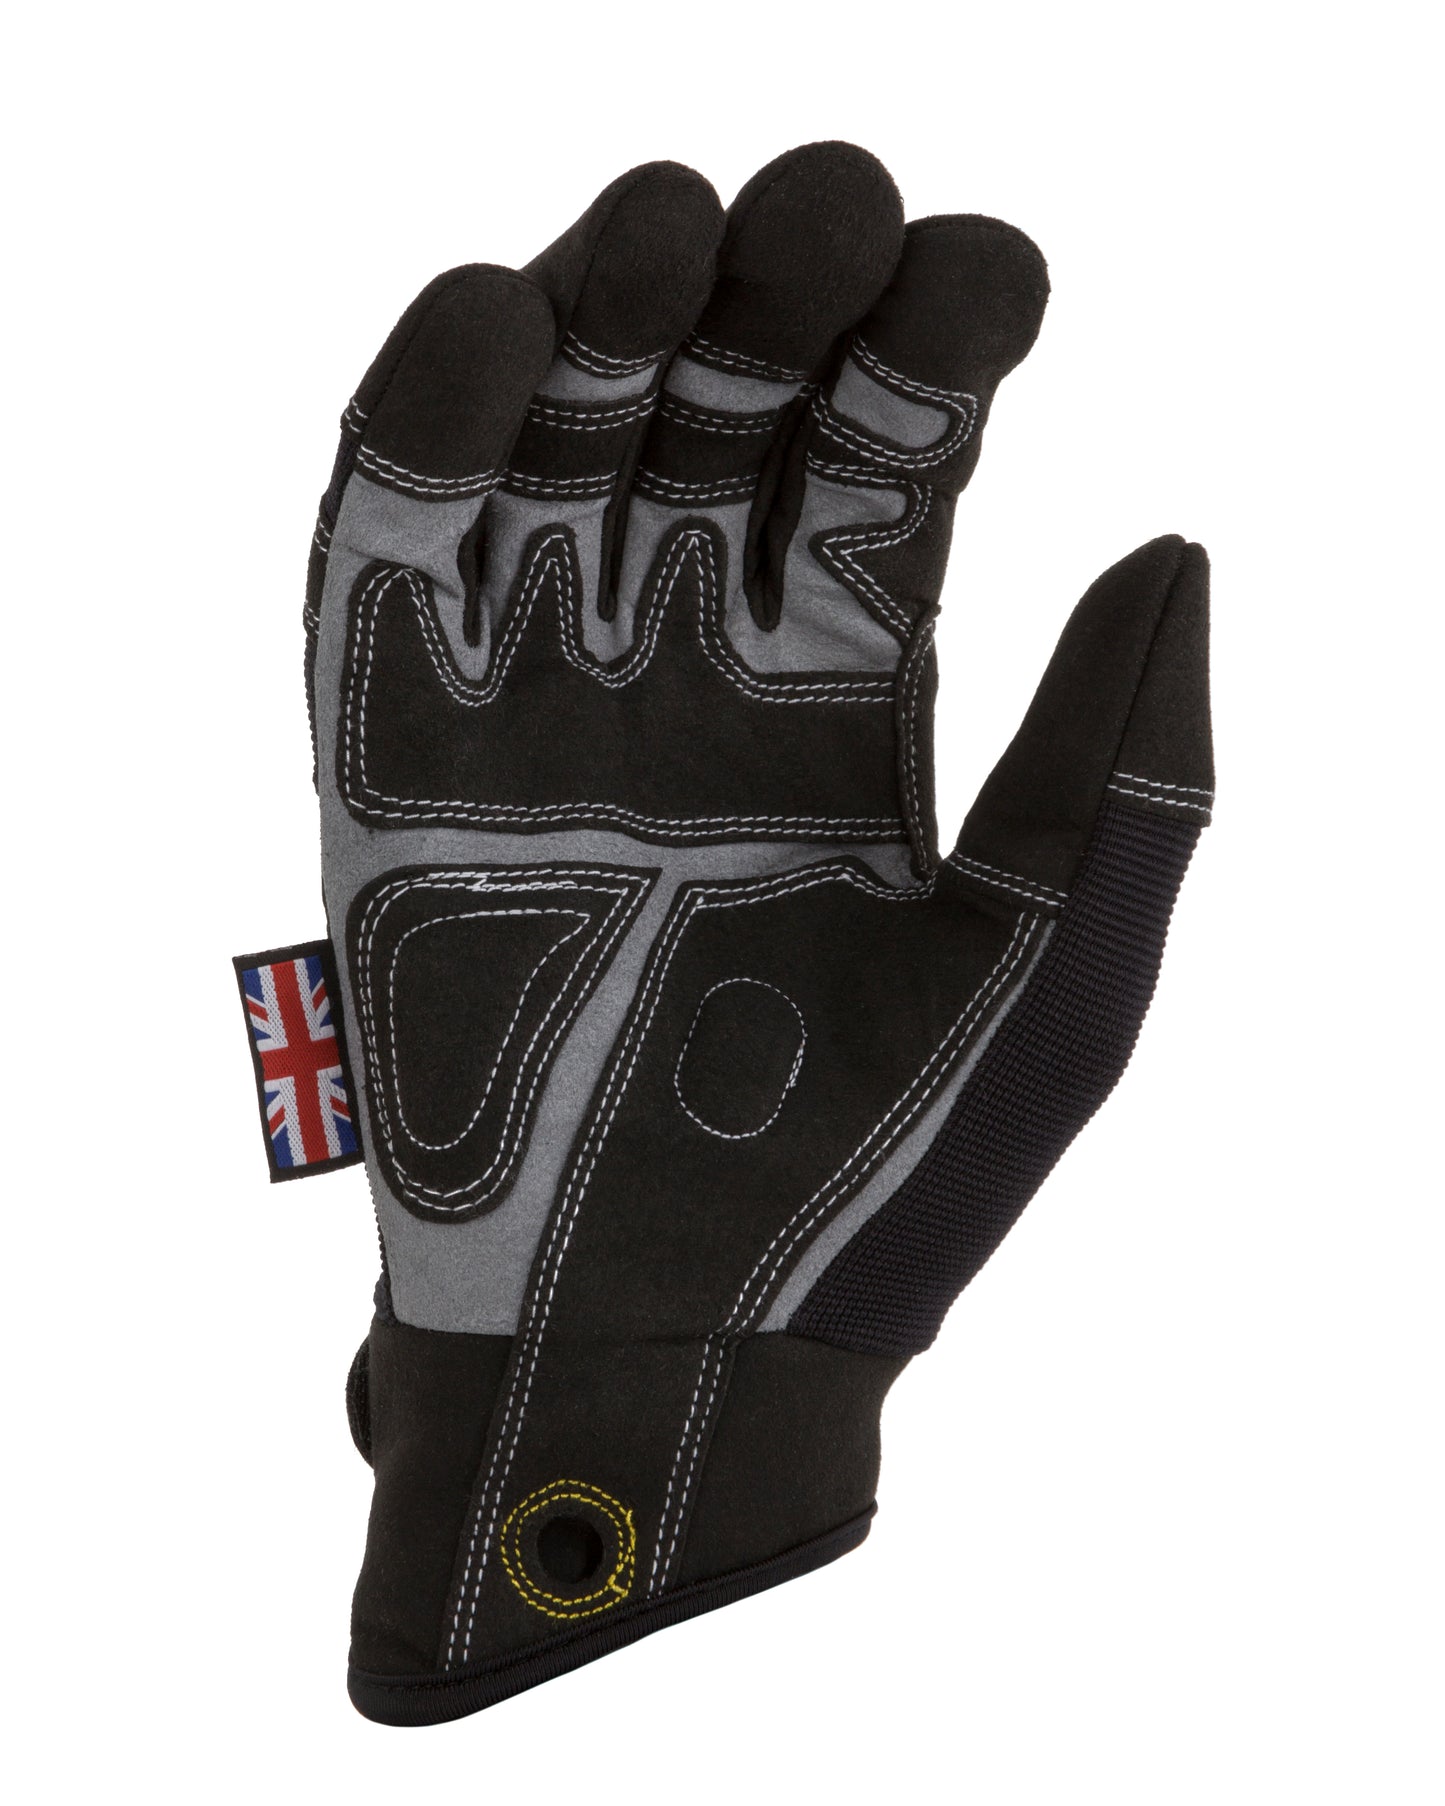 Comfort Fit™ Rigger Glove